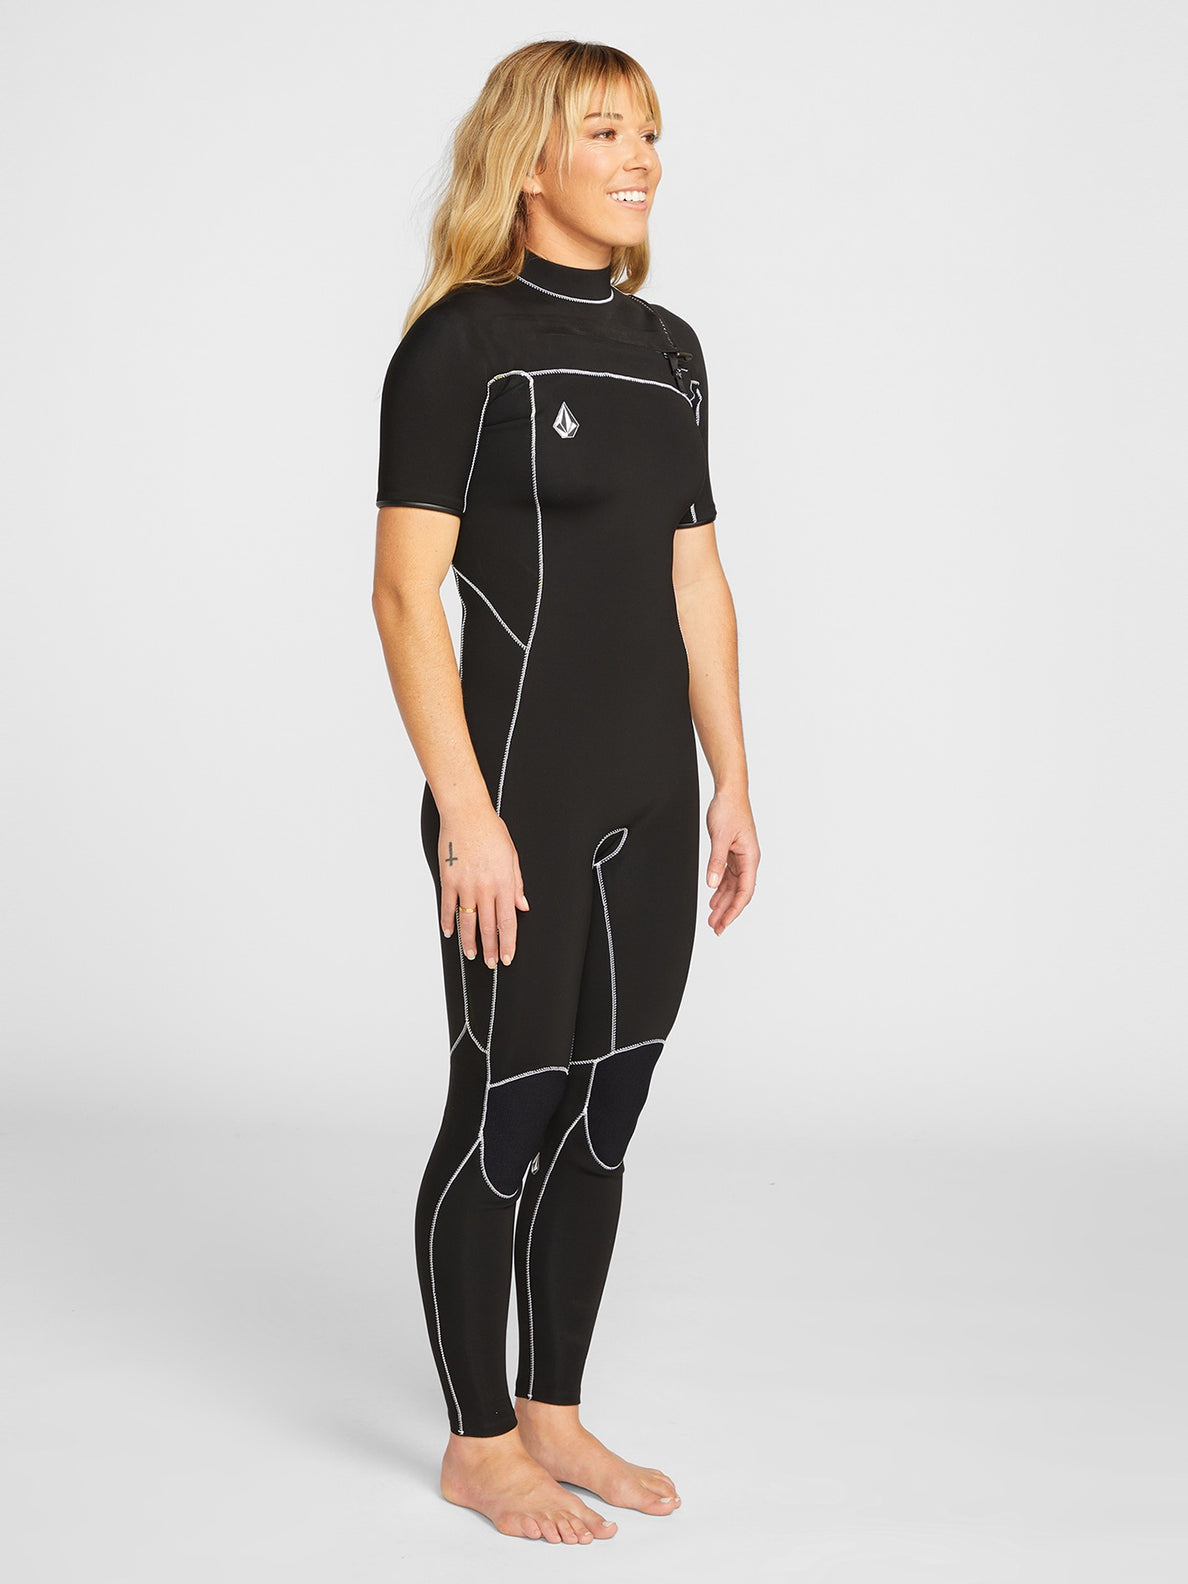 Womens Modulator 2mm Short Sleeve Wetsuit - Black